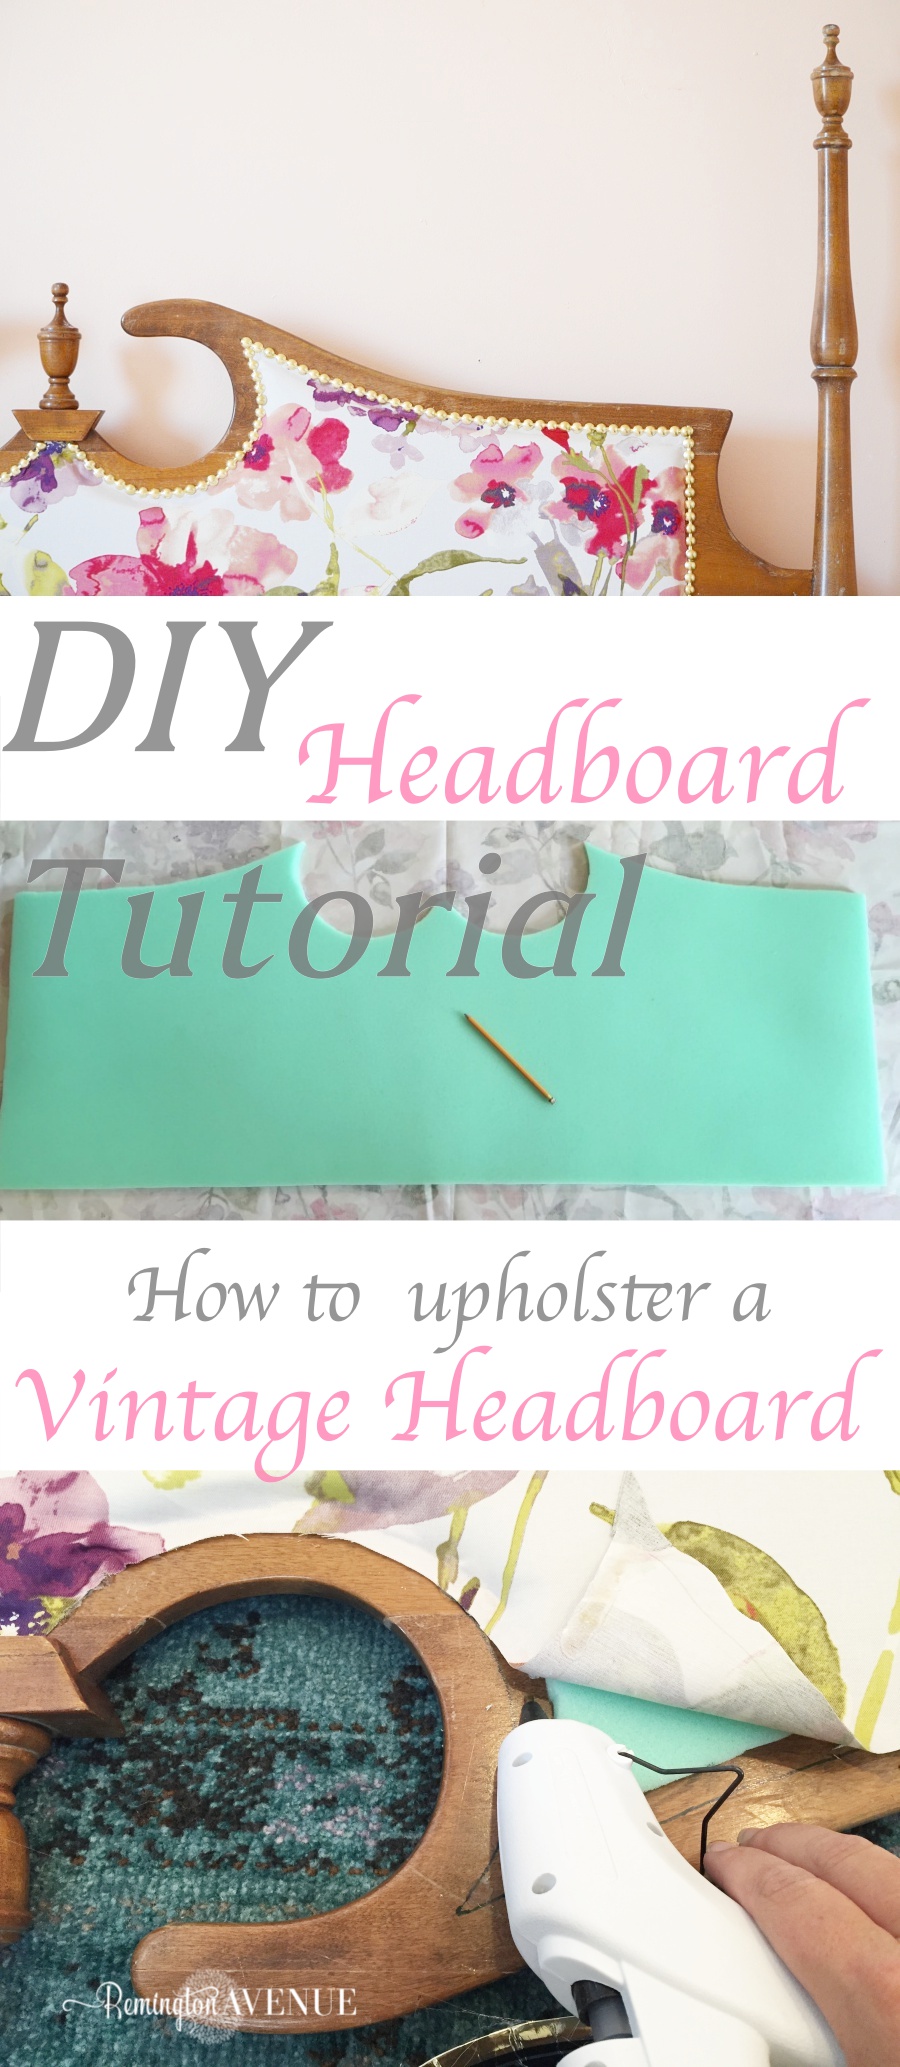 DIY upholstered vintage headboard